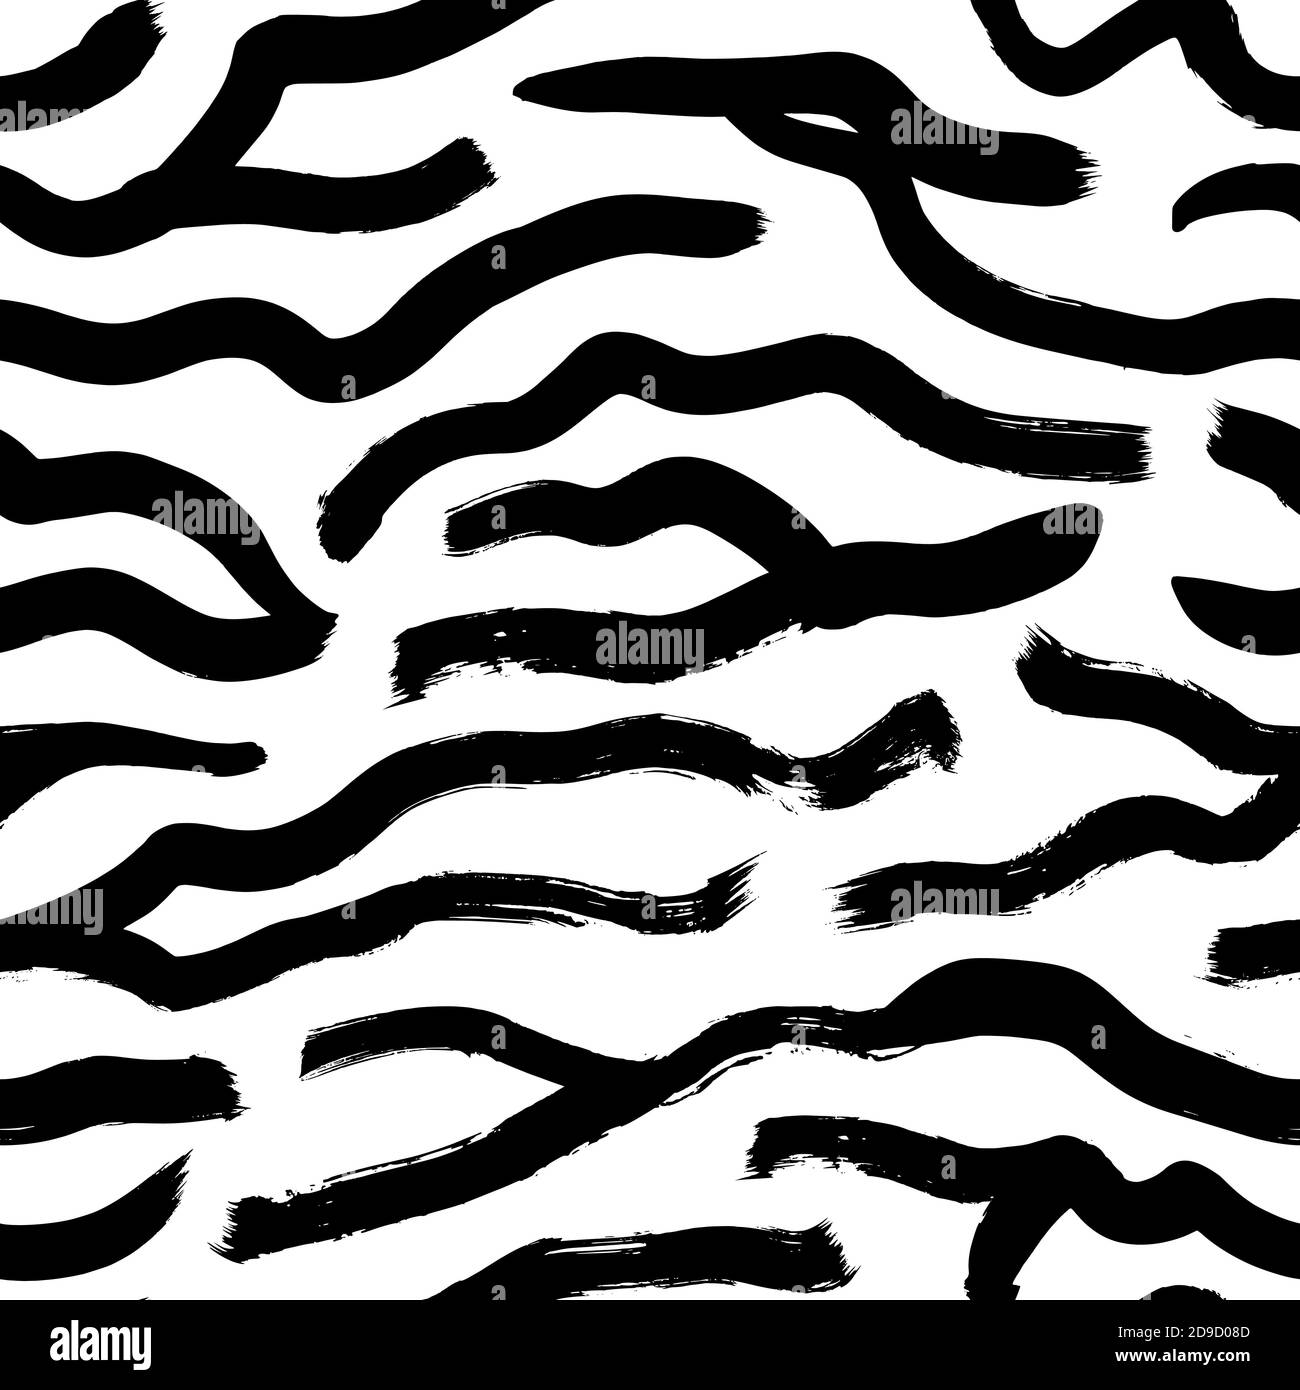 Hand drawn zebra stripes vector seamless pattern. Stock Vector